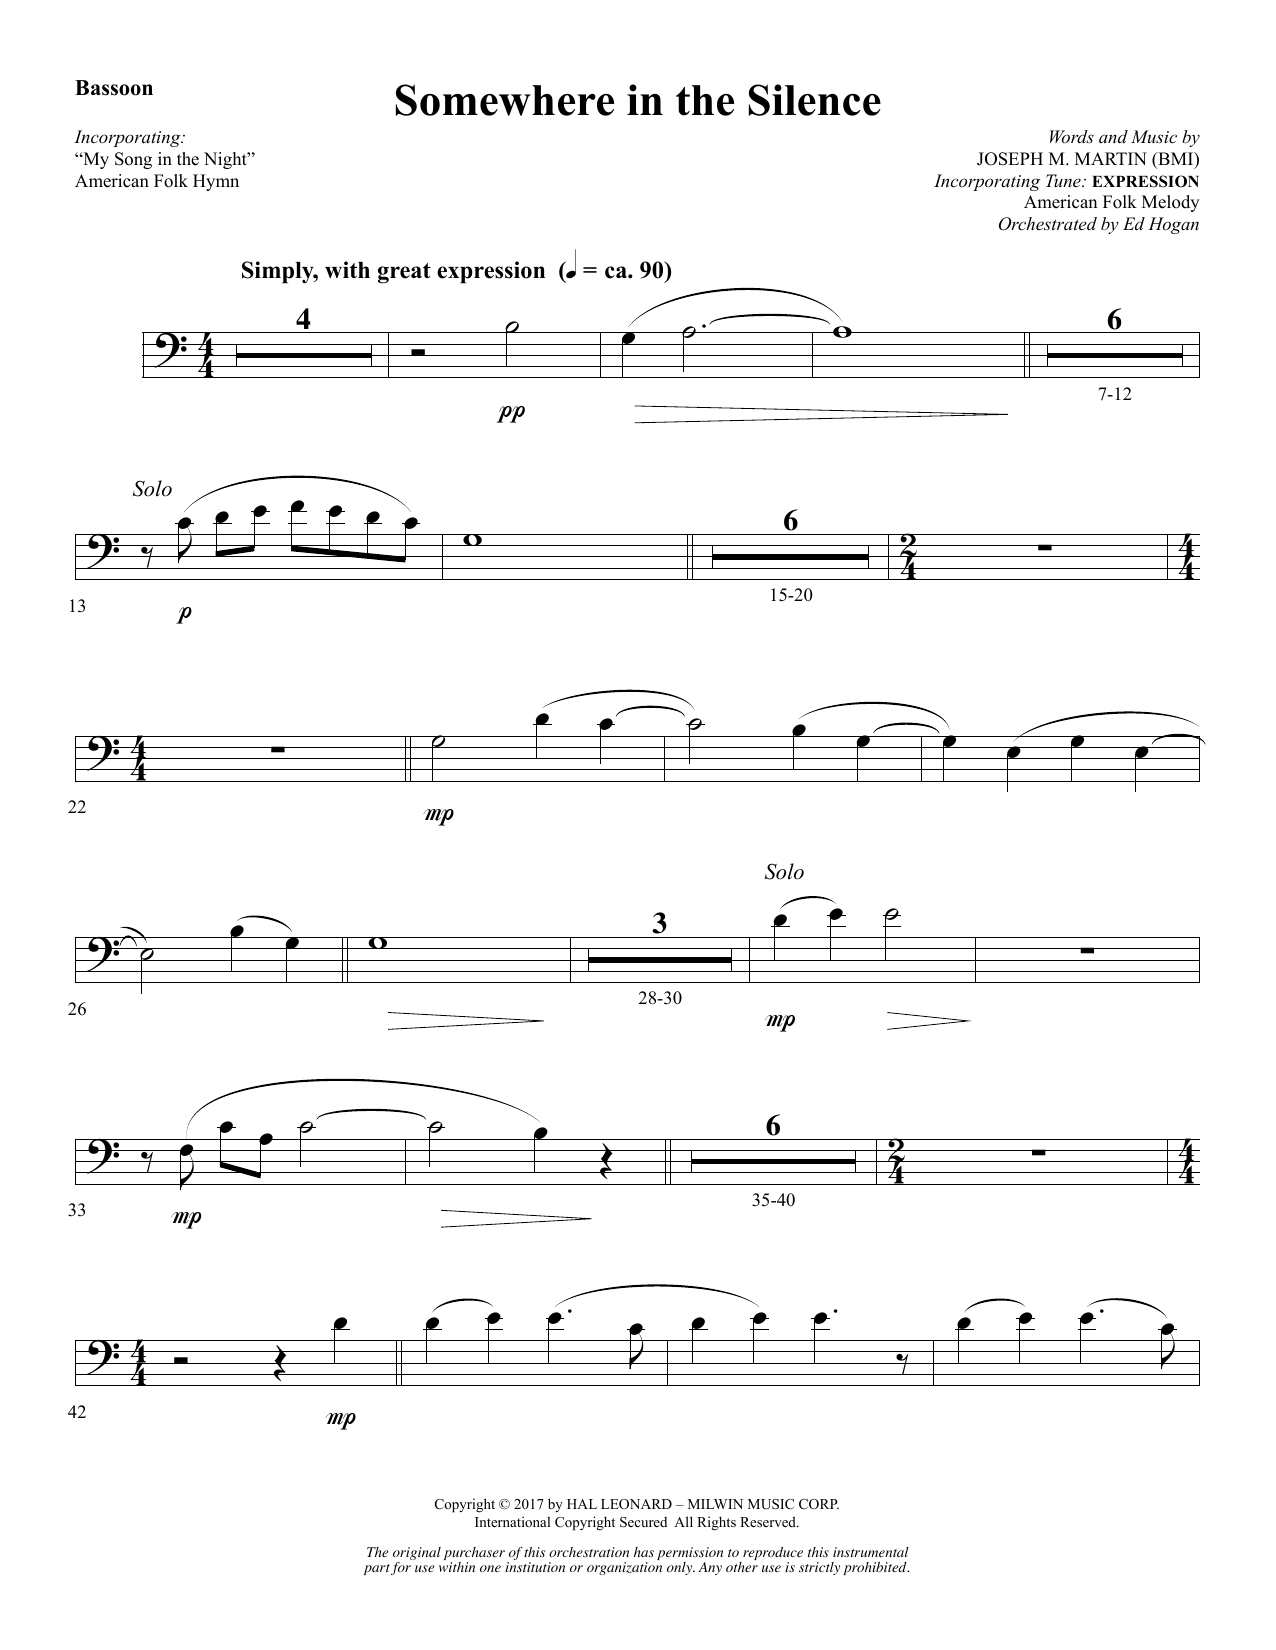 Download Joseph M. Martin Somewhere in the Silence - Bassoon Sheet Music